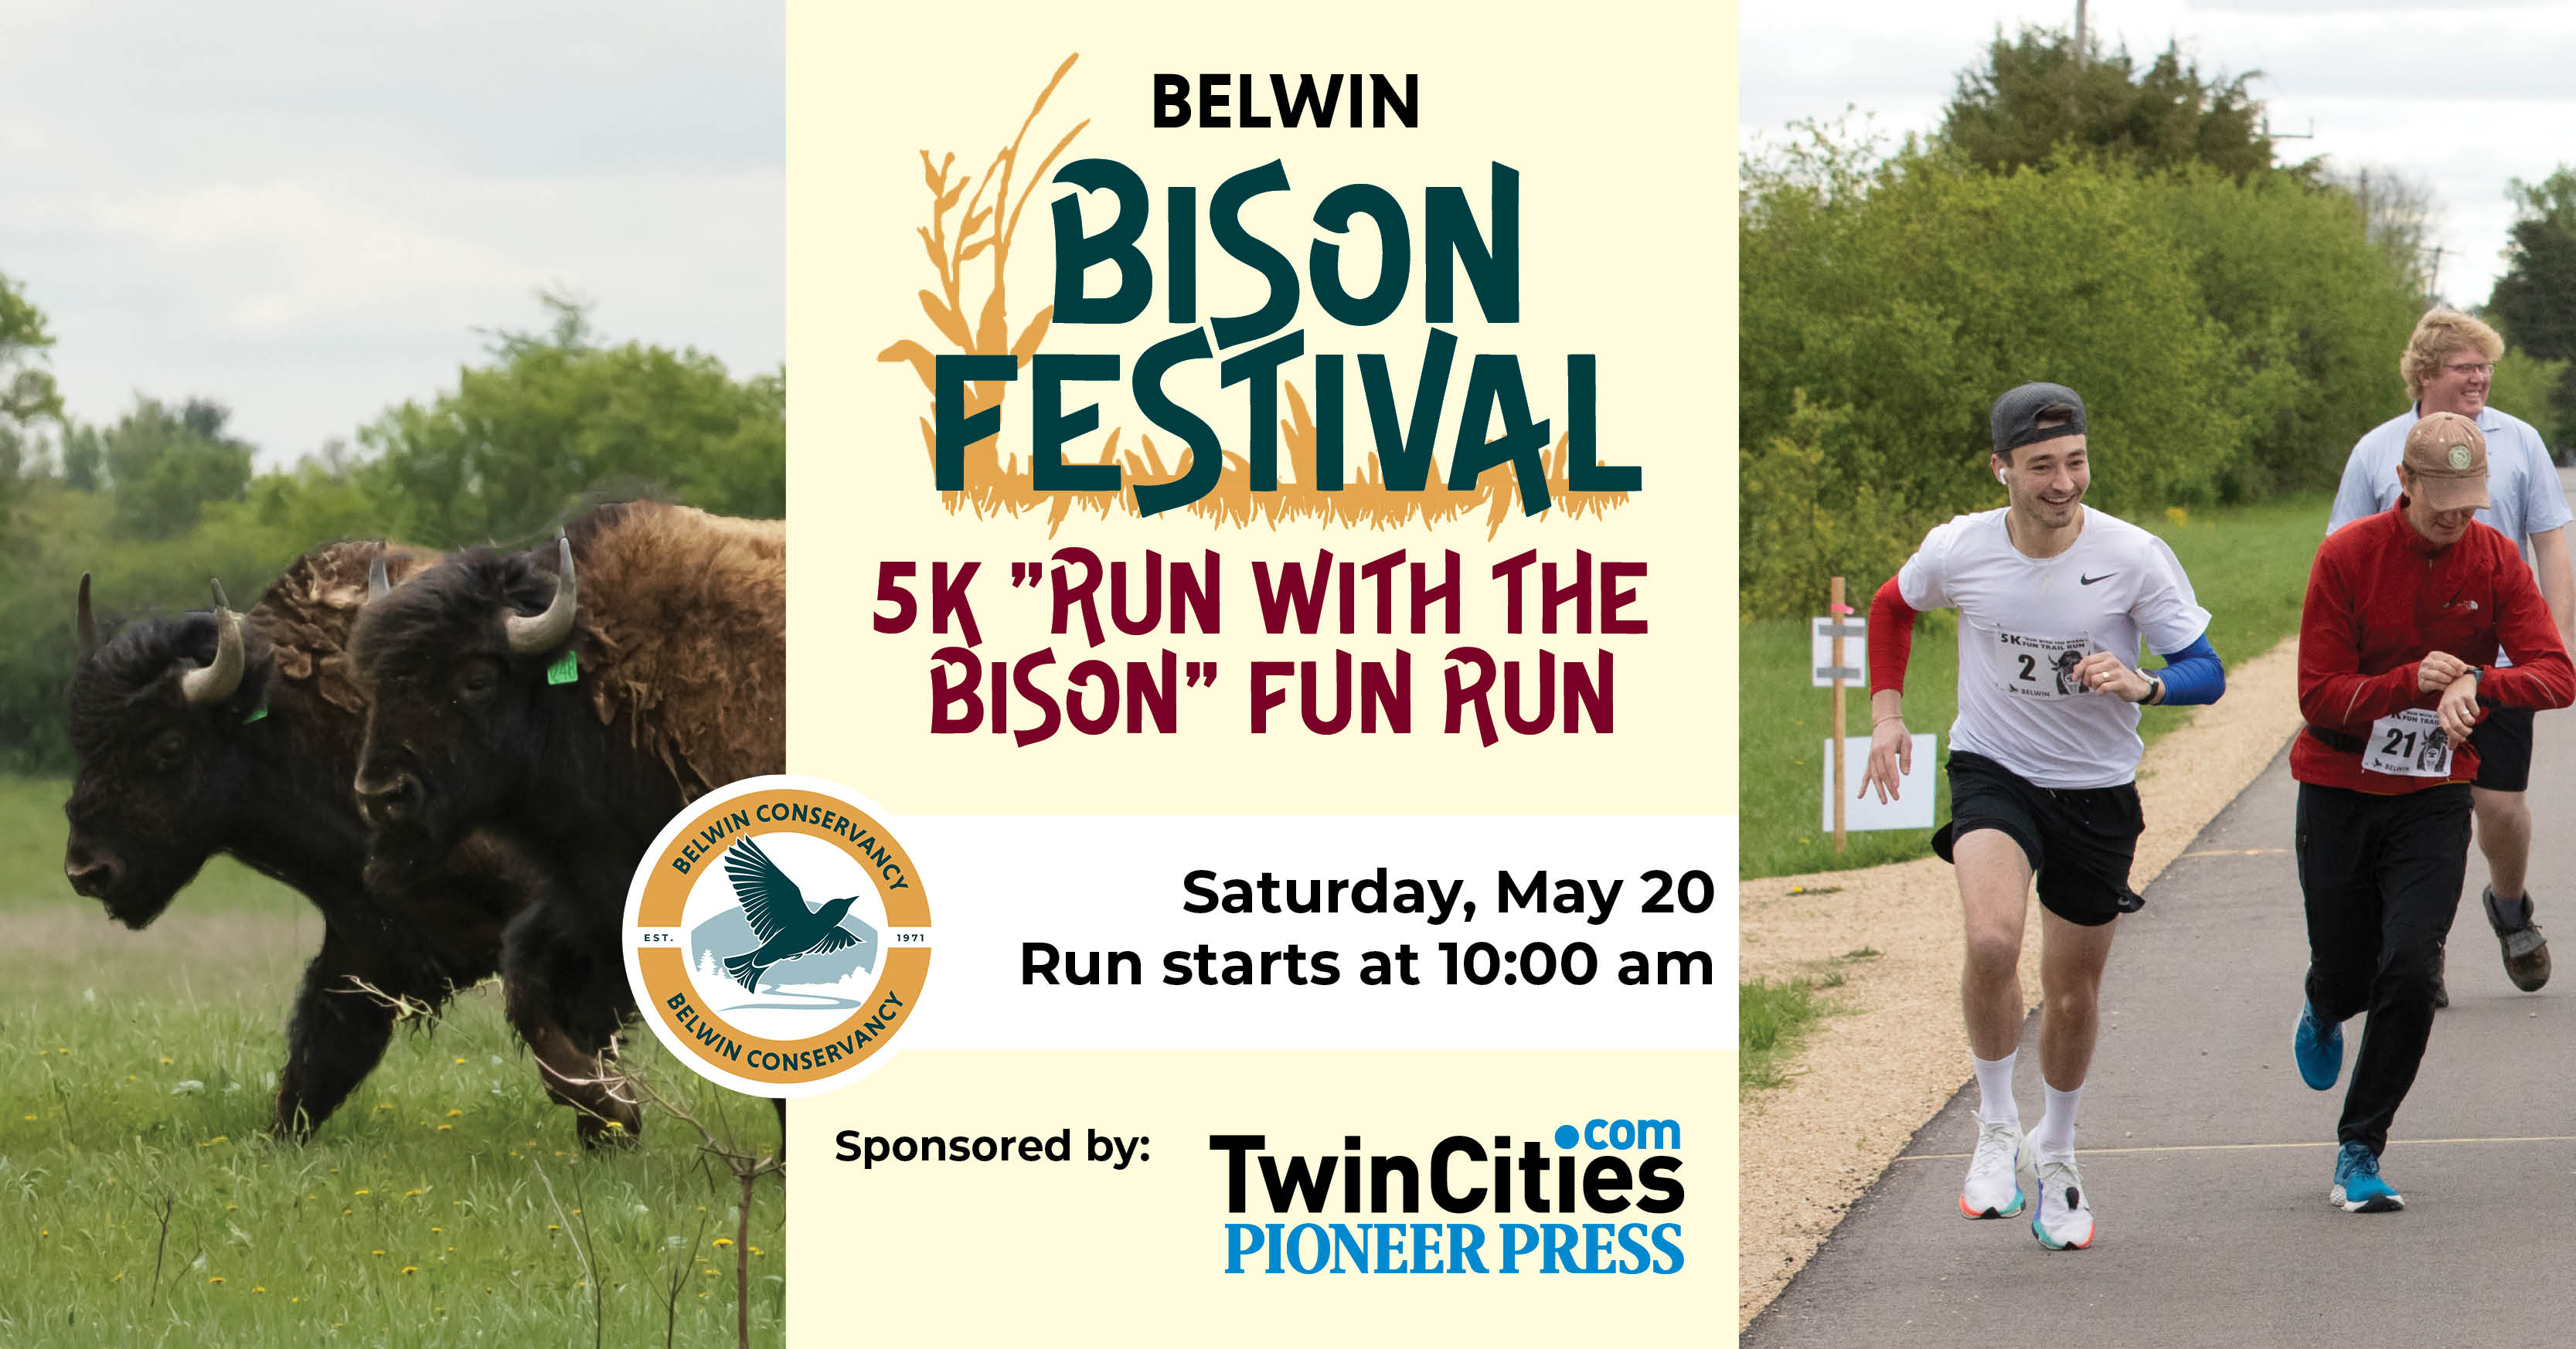 5k “Run with the Bison” Fun Run in Afton, MN Details, Registration